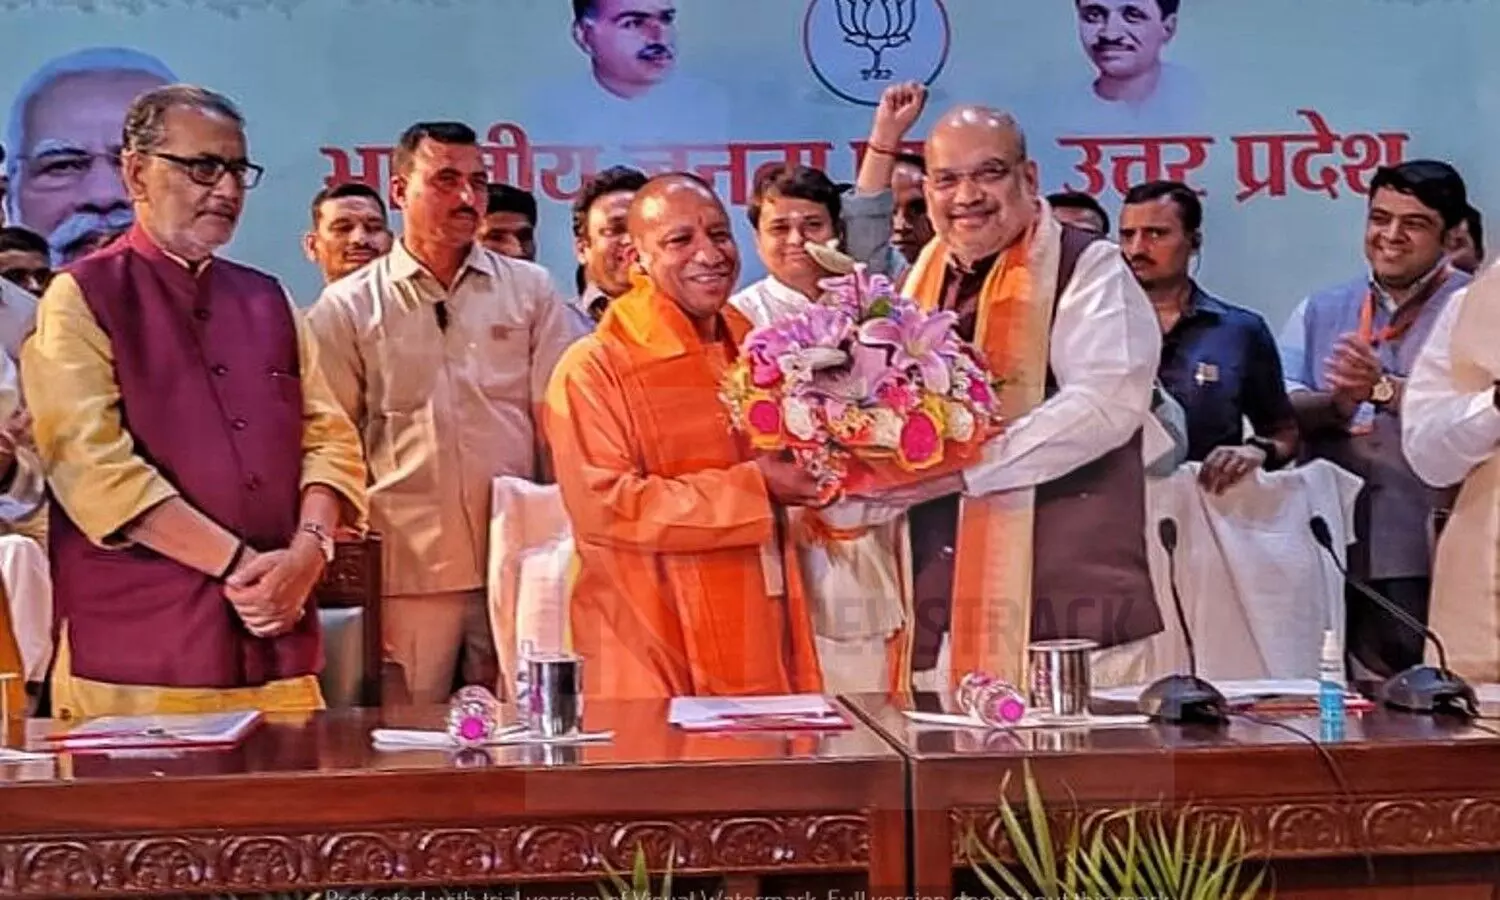 Amit Shah congratulating Chief Minister Yogi Adityanath